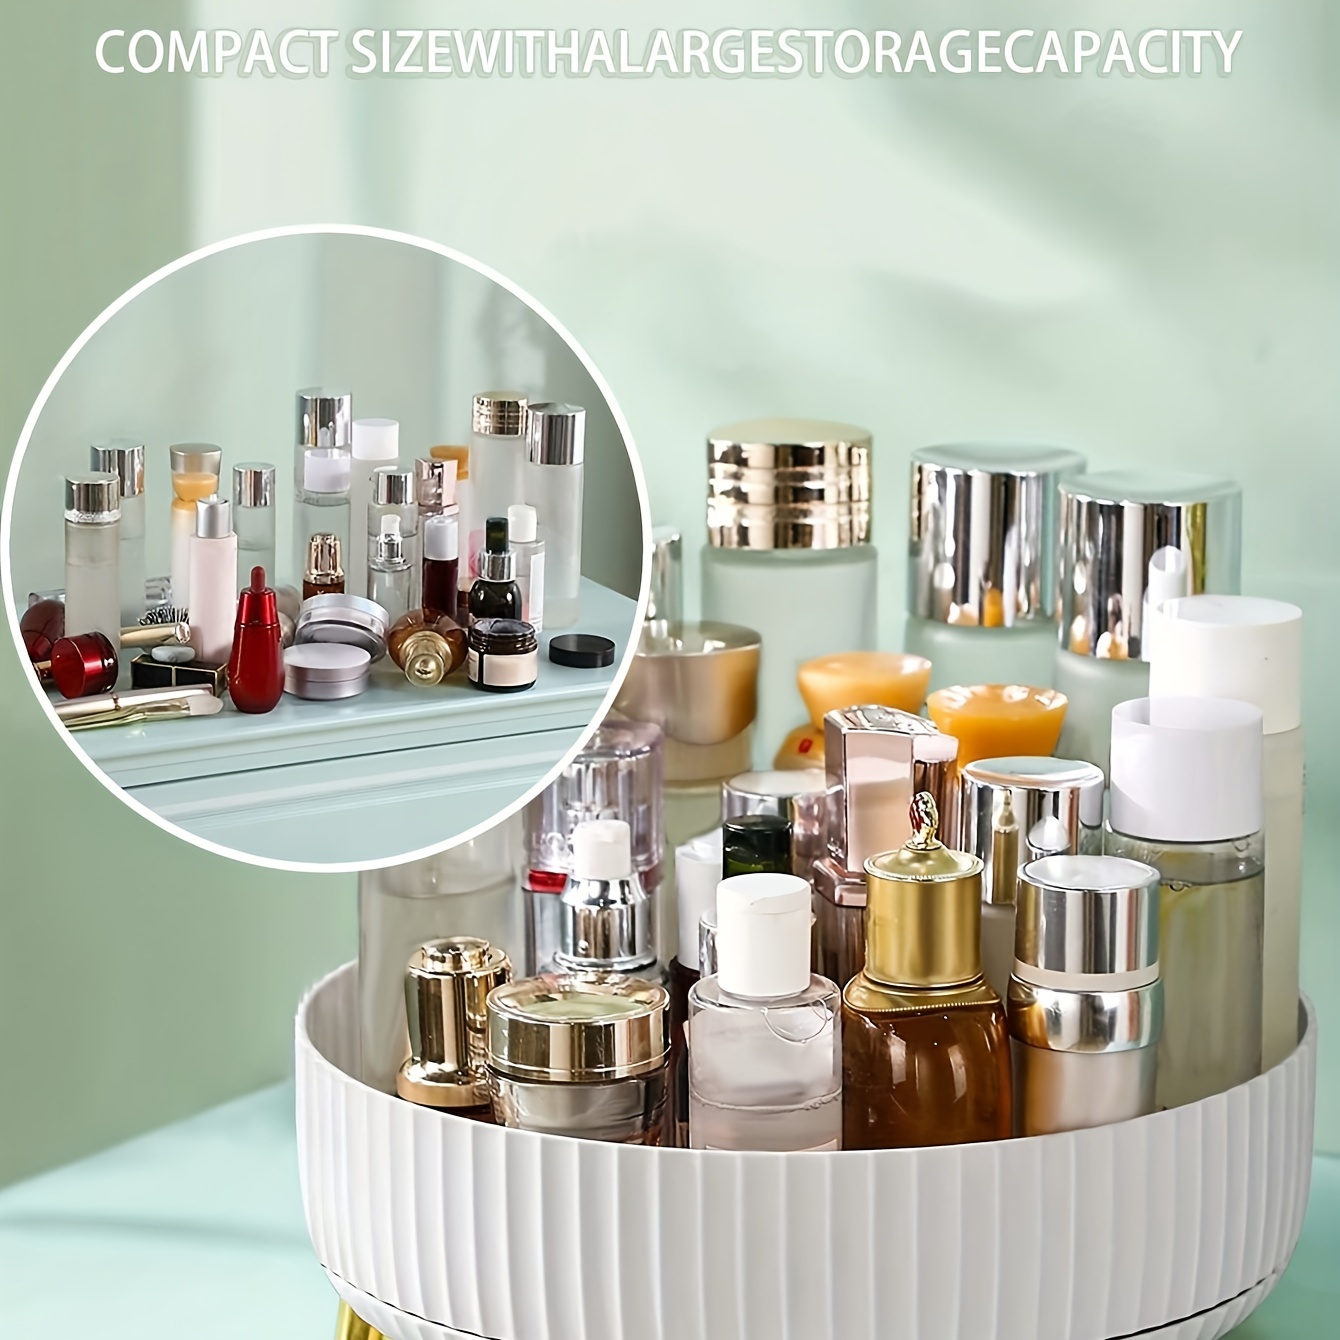 Large Makeup Organizer Cosmetic Storage Box For Desk, Bathroom